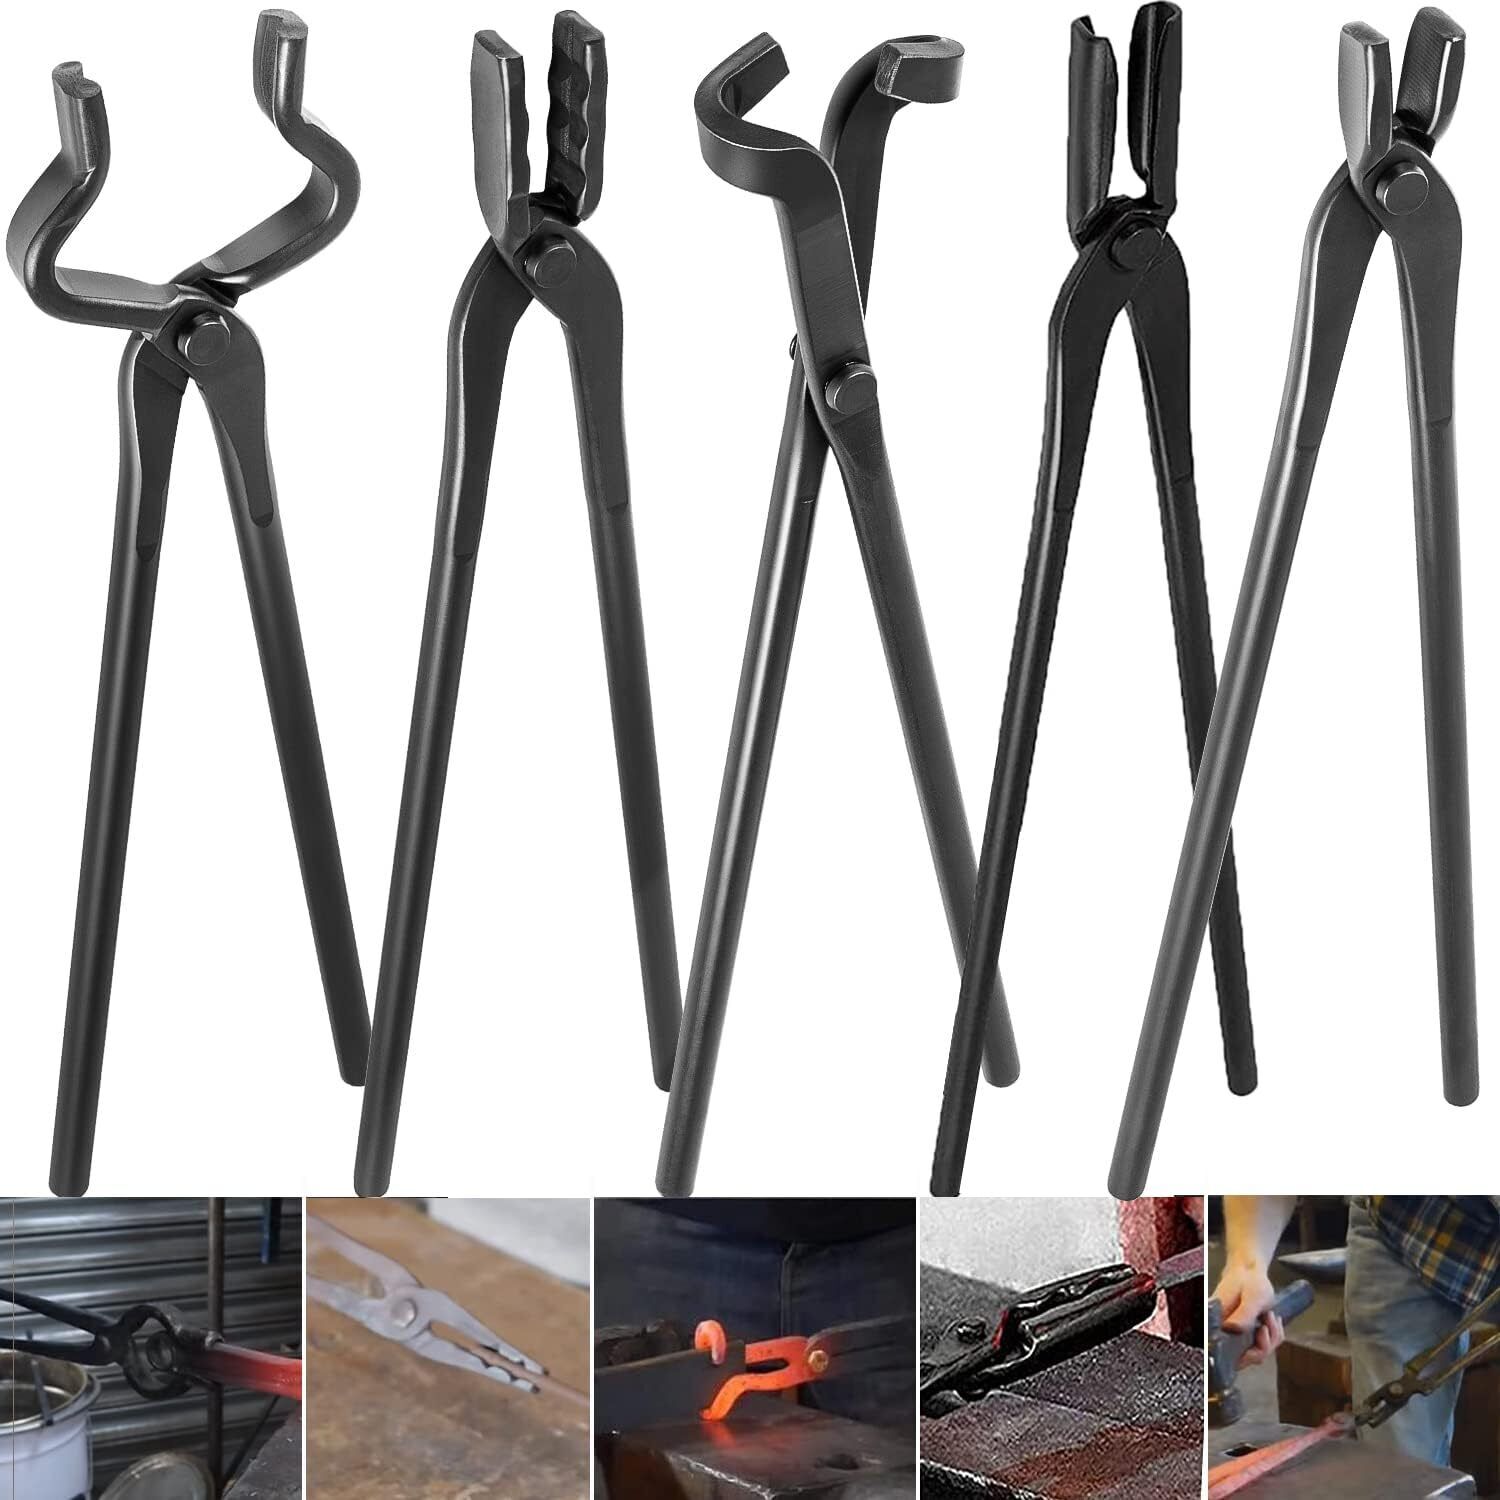 Professional Blacksmith Tongs Tools Set For Anvil, Steel Knife Making Set 5PCS 